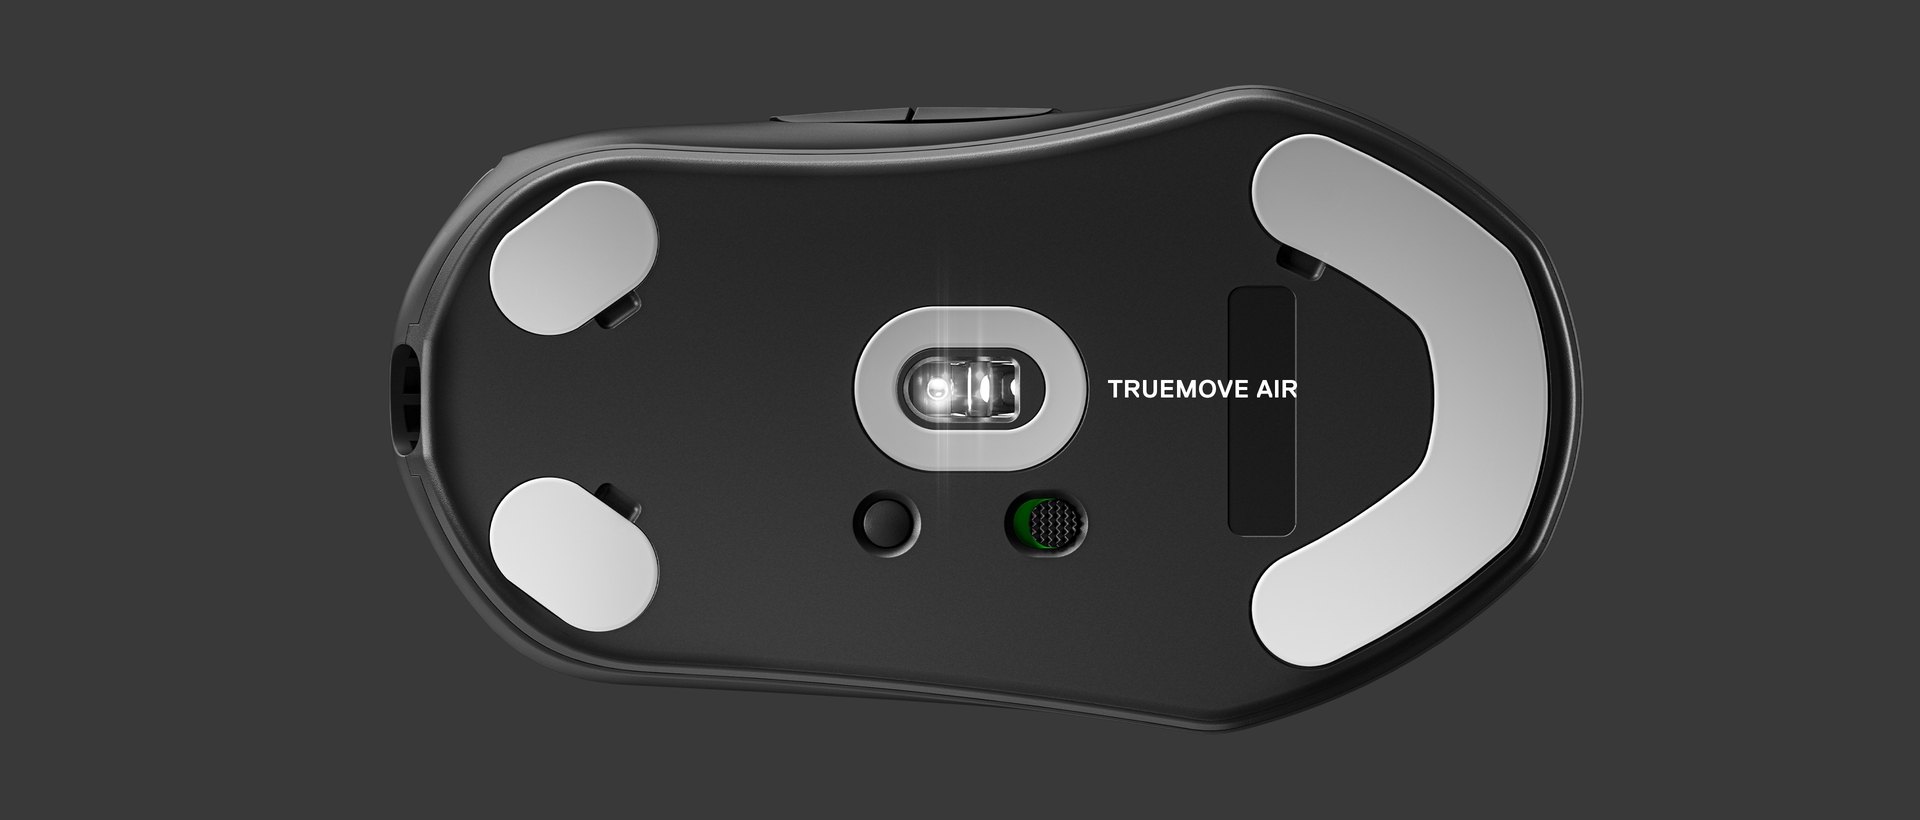 Cảm biến TrueMove Air của chuột không dây Prime Wireless 